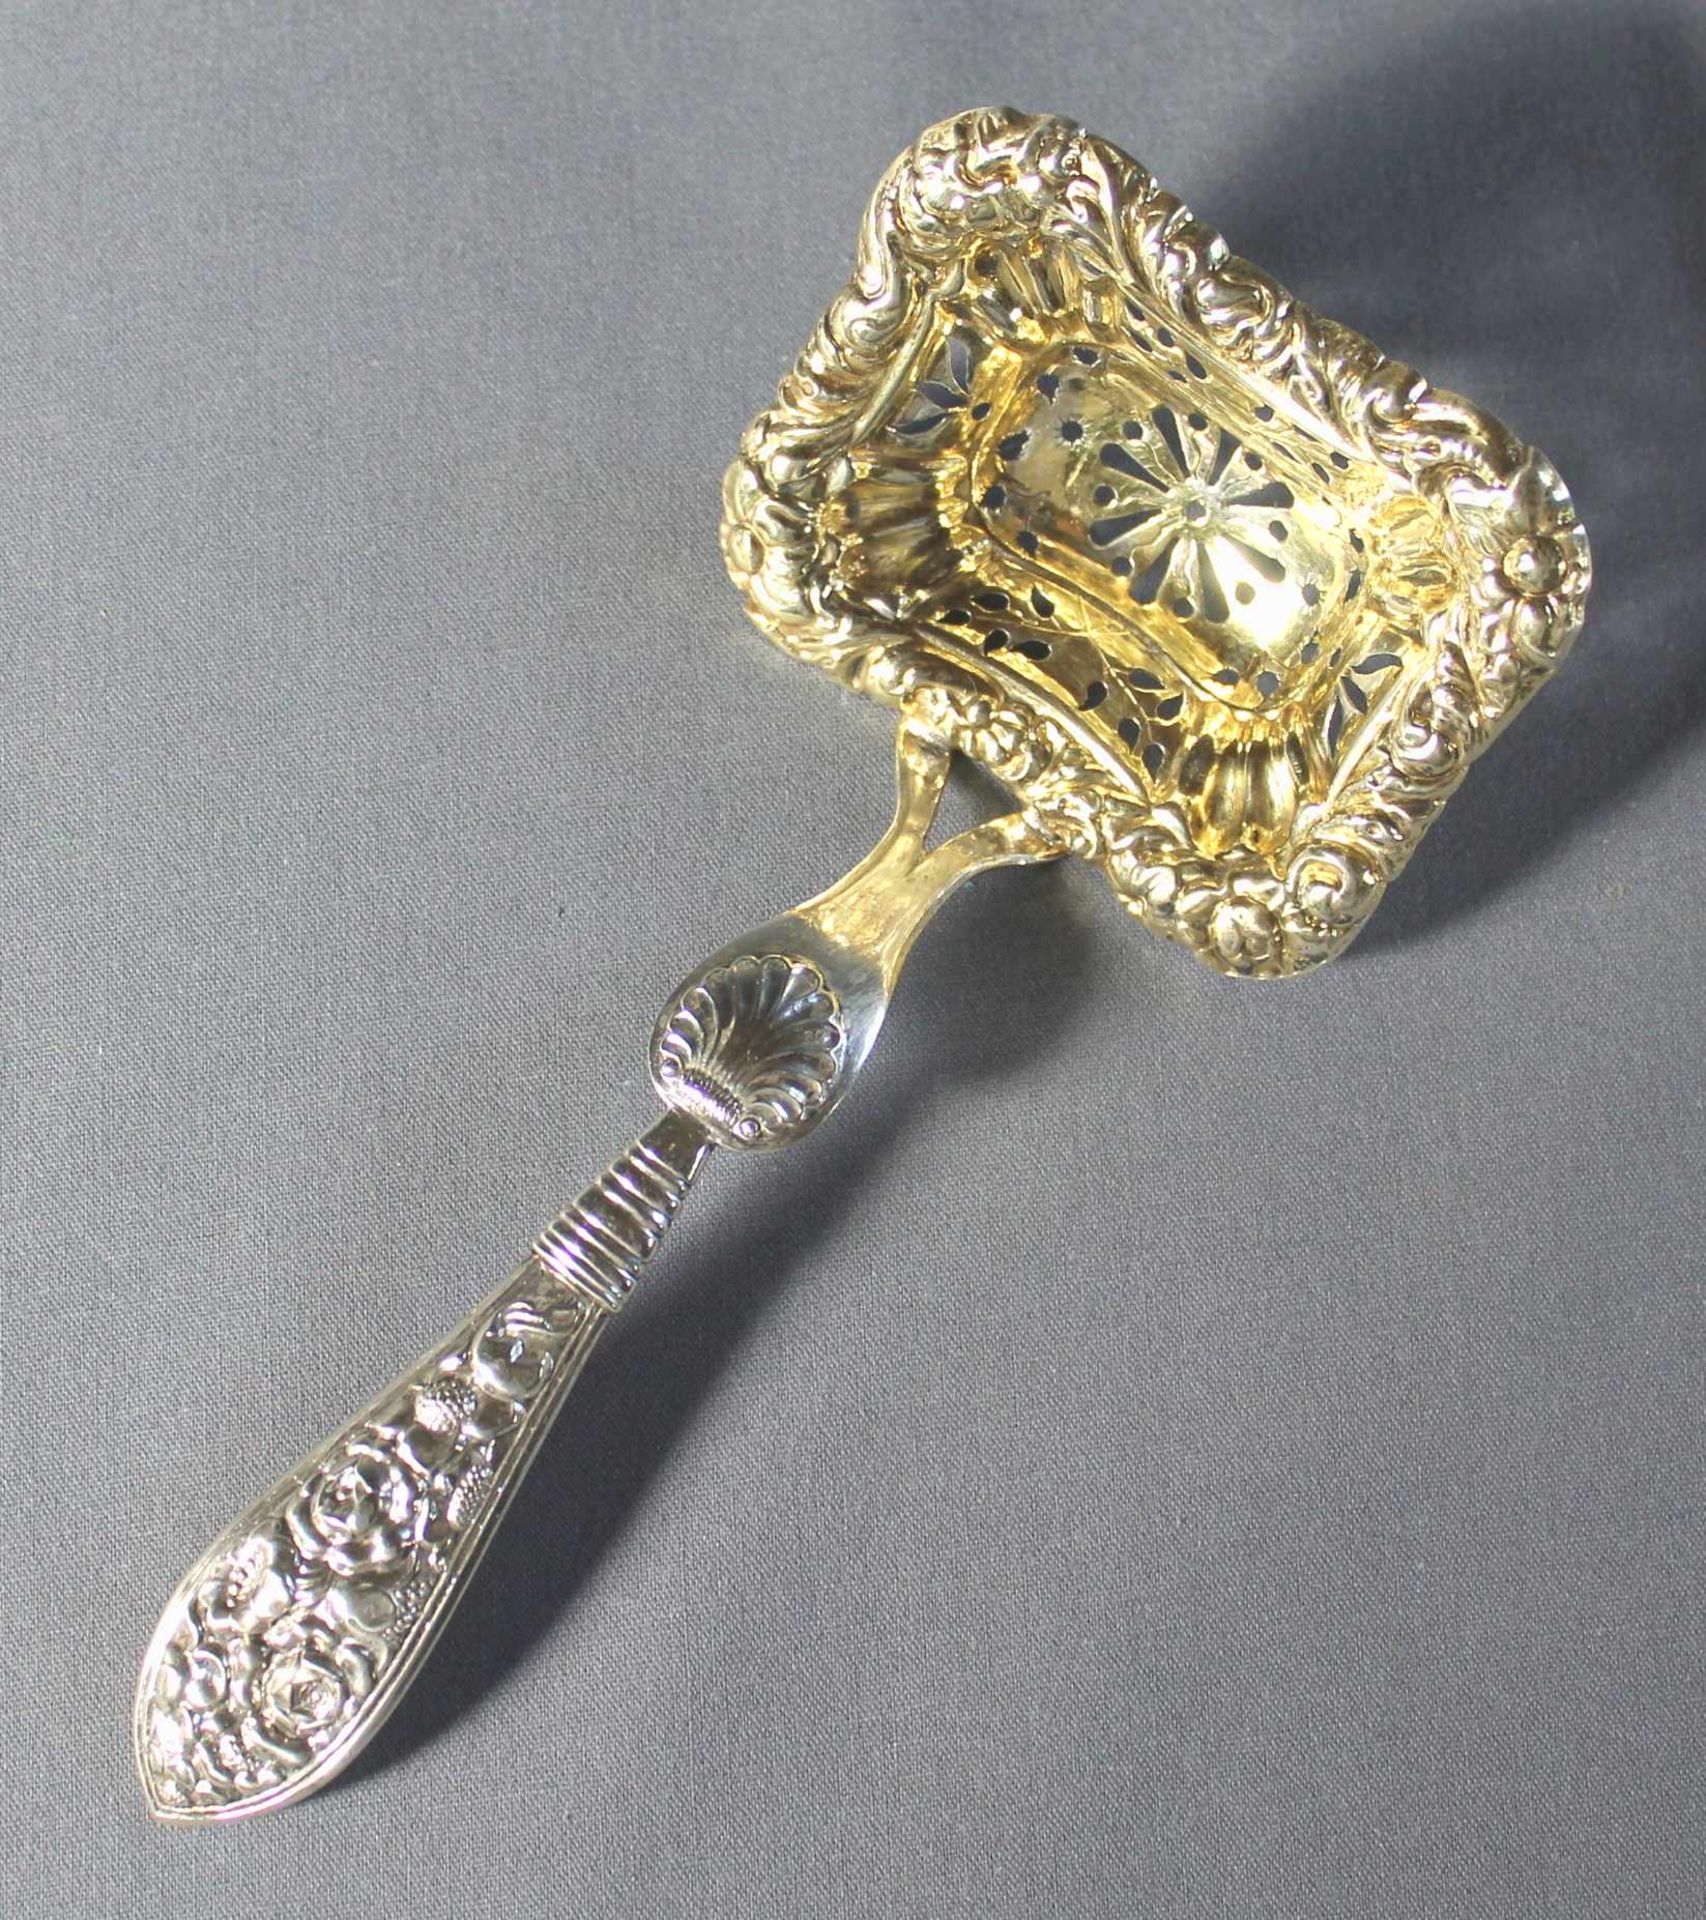 1 Zucker-Streulöffel Silber, Laffe vergoldet, reich verziert mit geprägtem Dekor, um 1880,